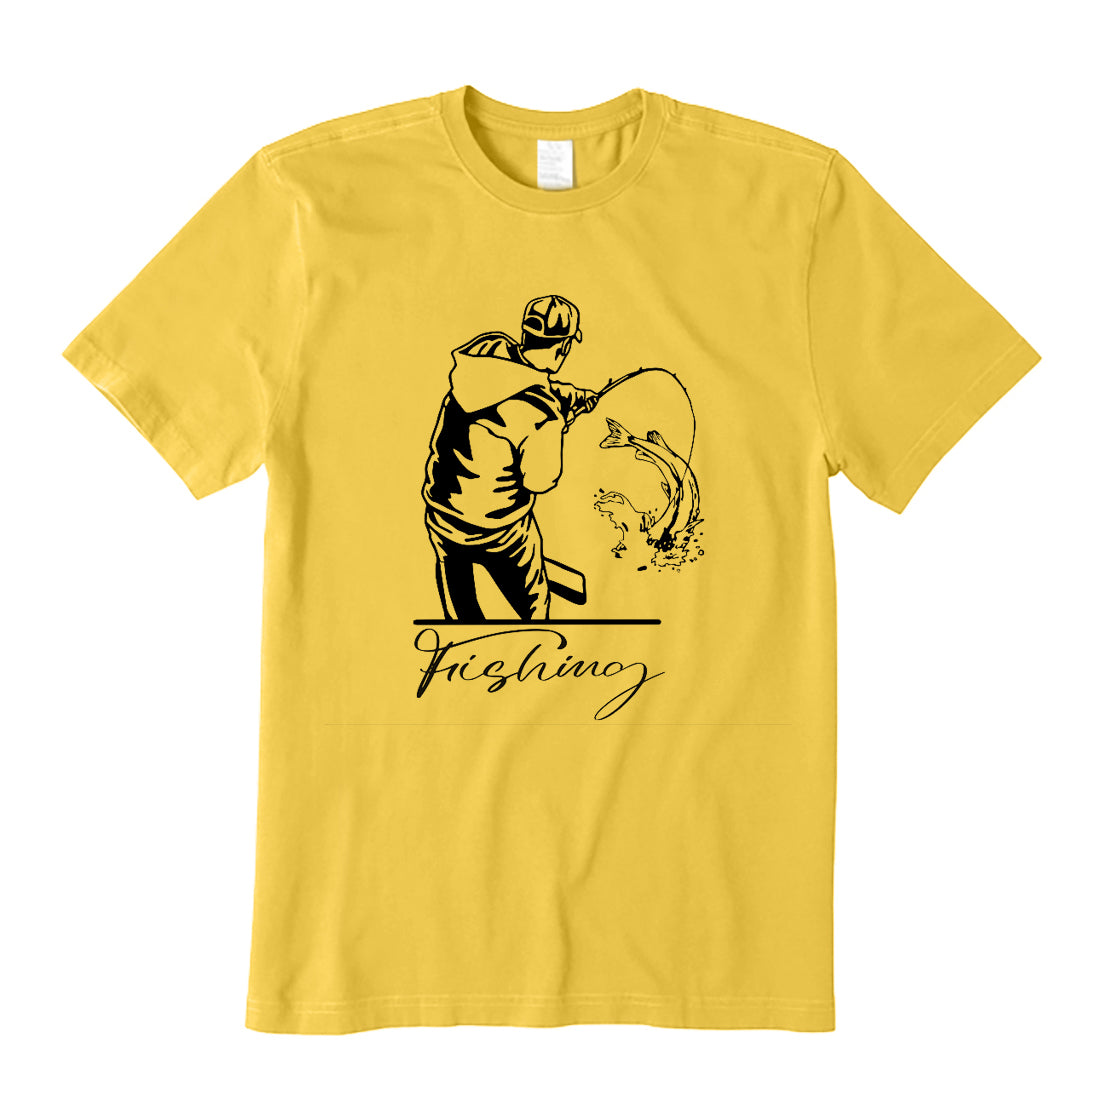 Fisherman Fishing T-Shirt